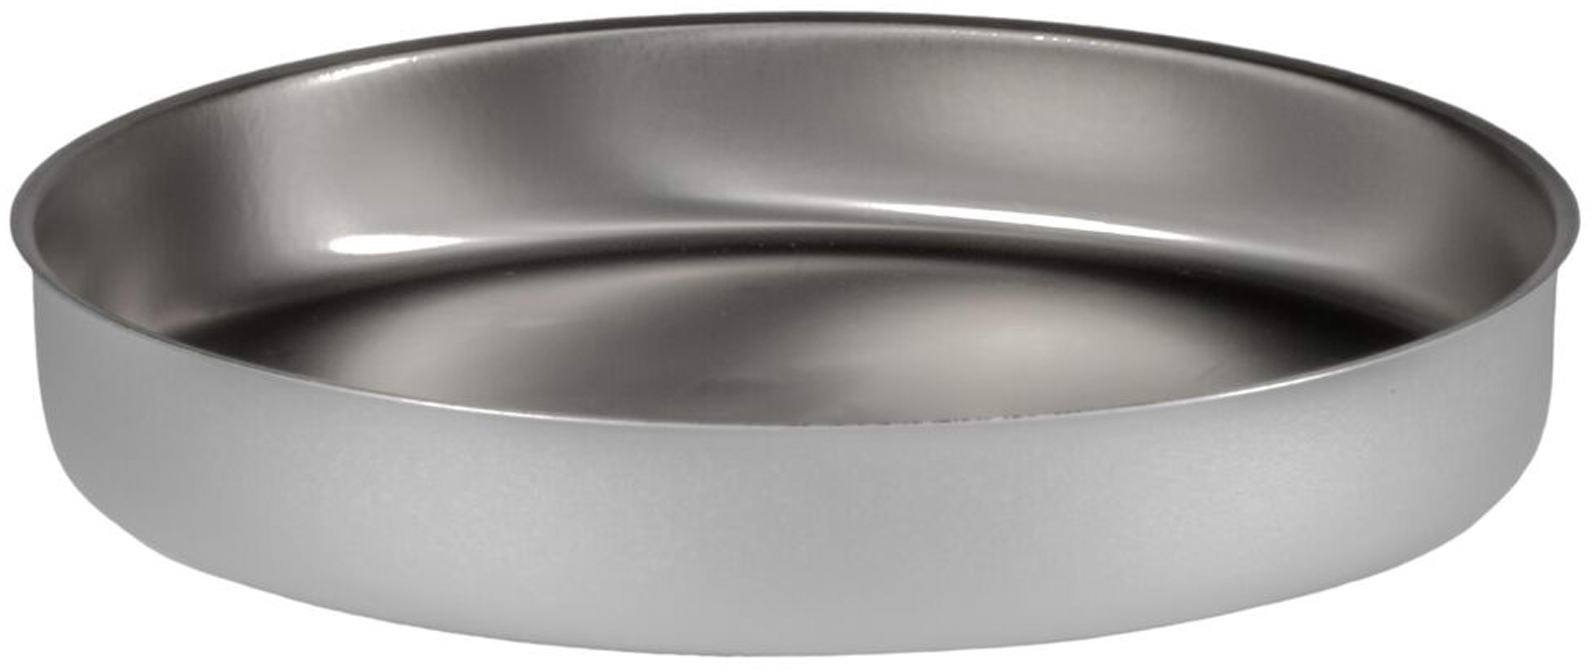 Frying pan / lid Duossal 27 series